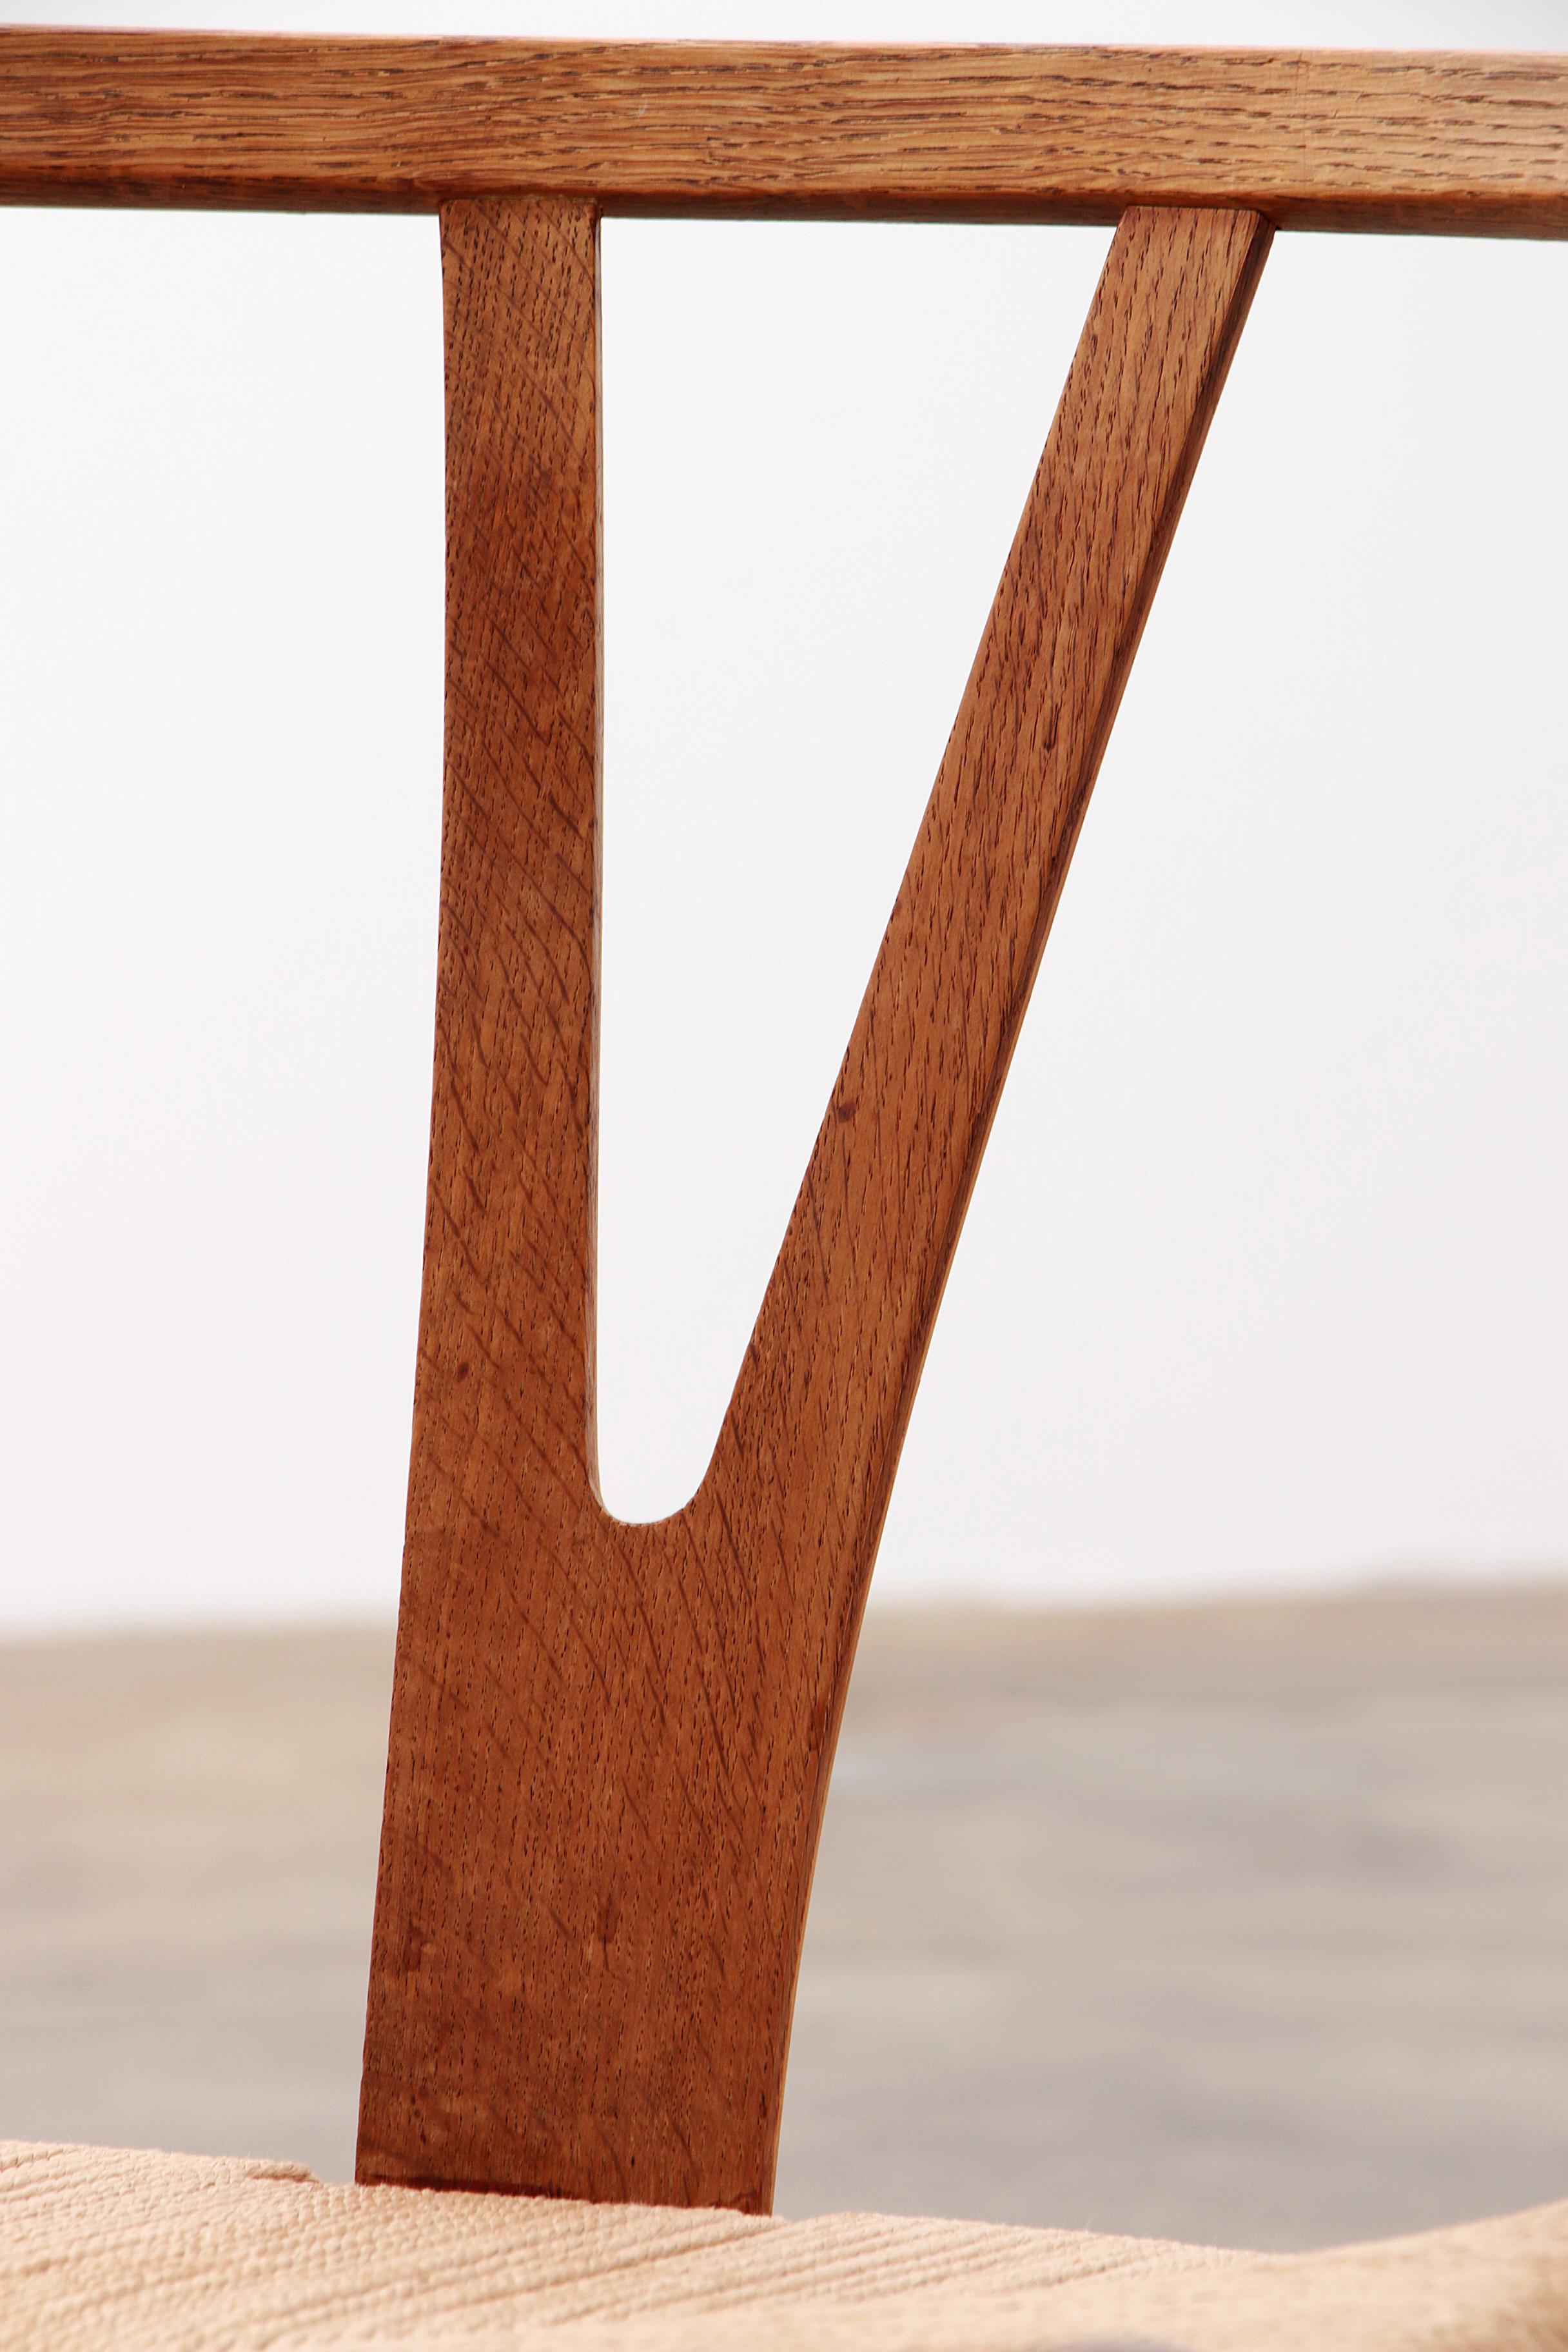 Hans Wegner Oak Wishbone Chairs made by Carl Hansen&Son 6